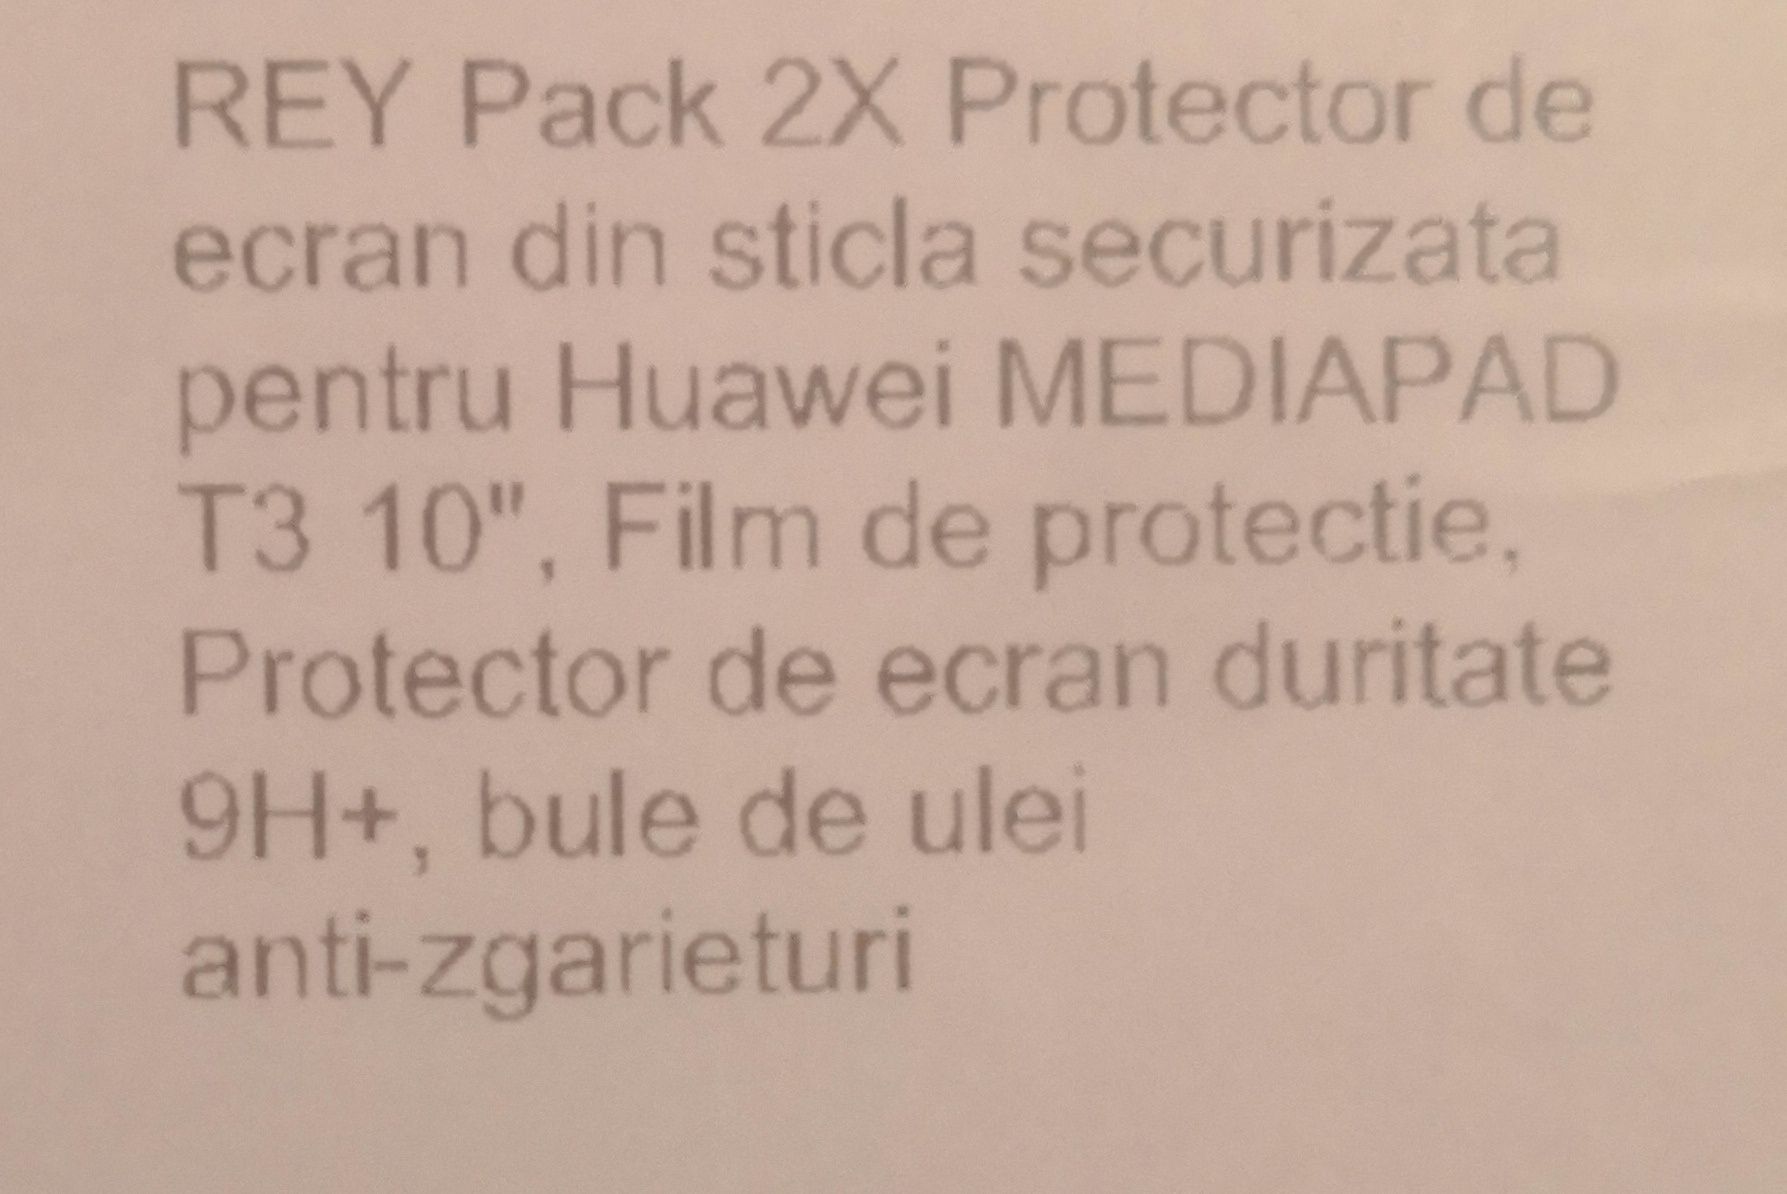 2 x Protectie de ecran din sticla securizata Huawei MEDIAPAD T3 10",NO